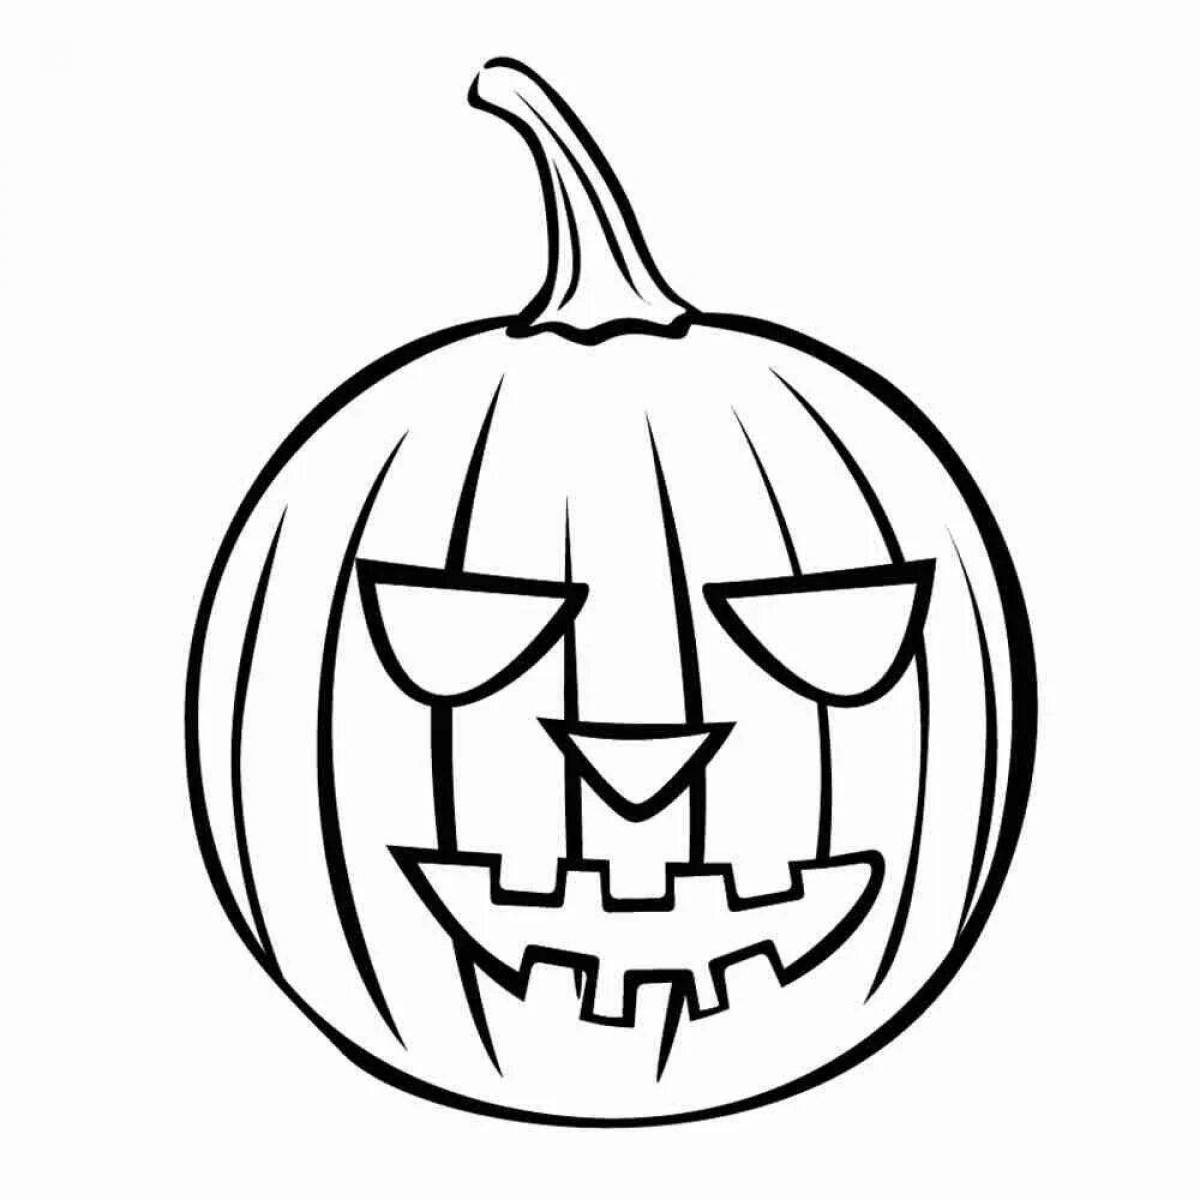 Disturbing halloween pumpkin coloring page